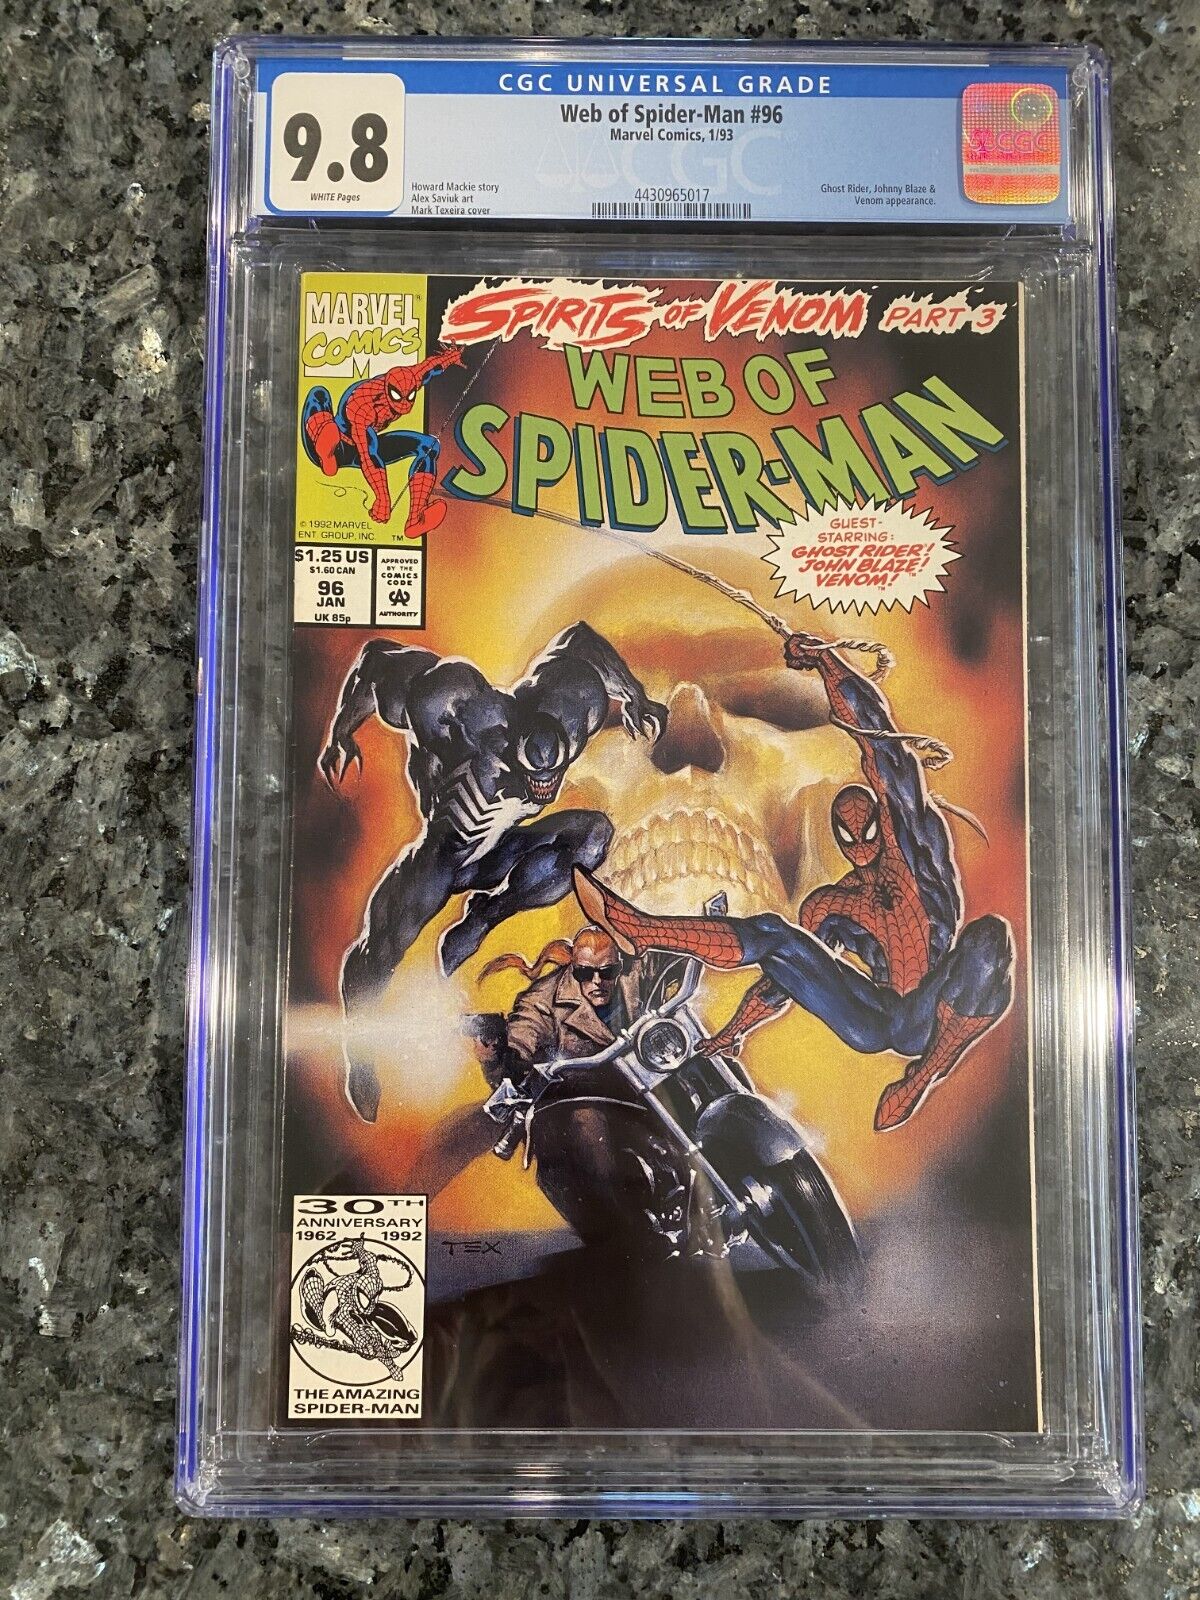 Web of Spider-Man #96-CGC Grade 9.8; Ghost Rider, Johnny Blaze, and Venom Appear